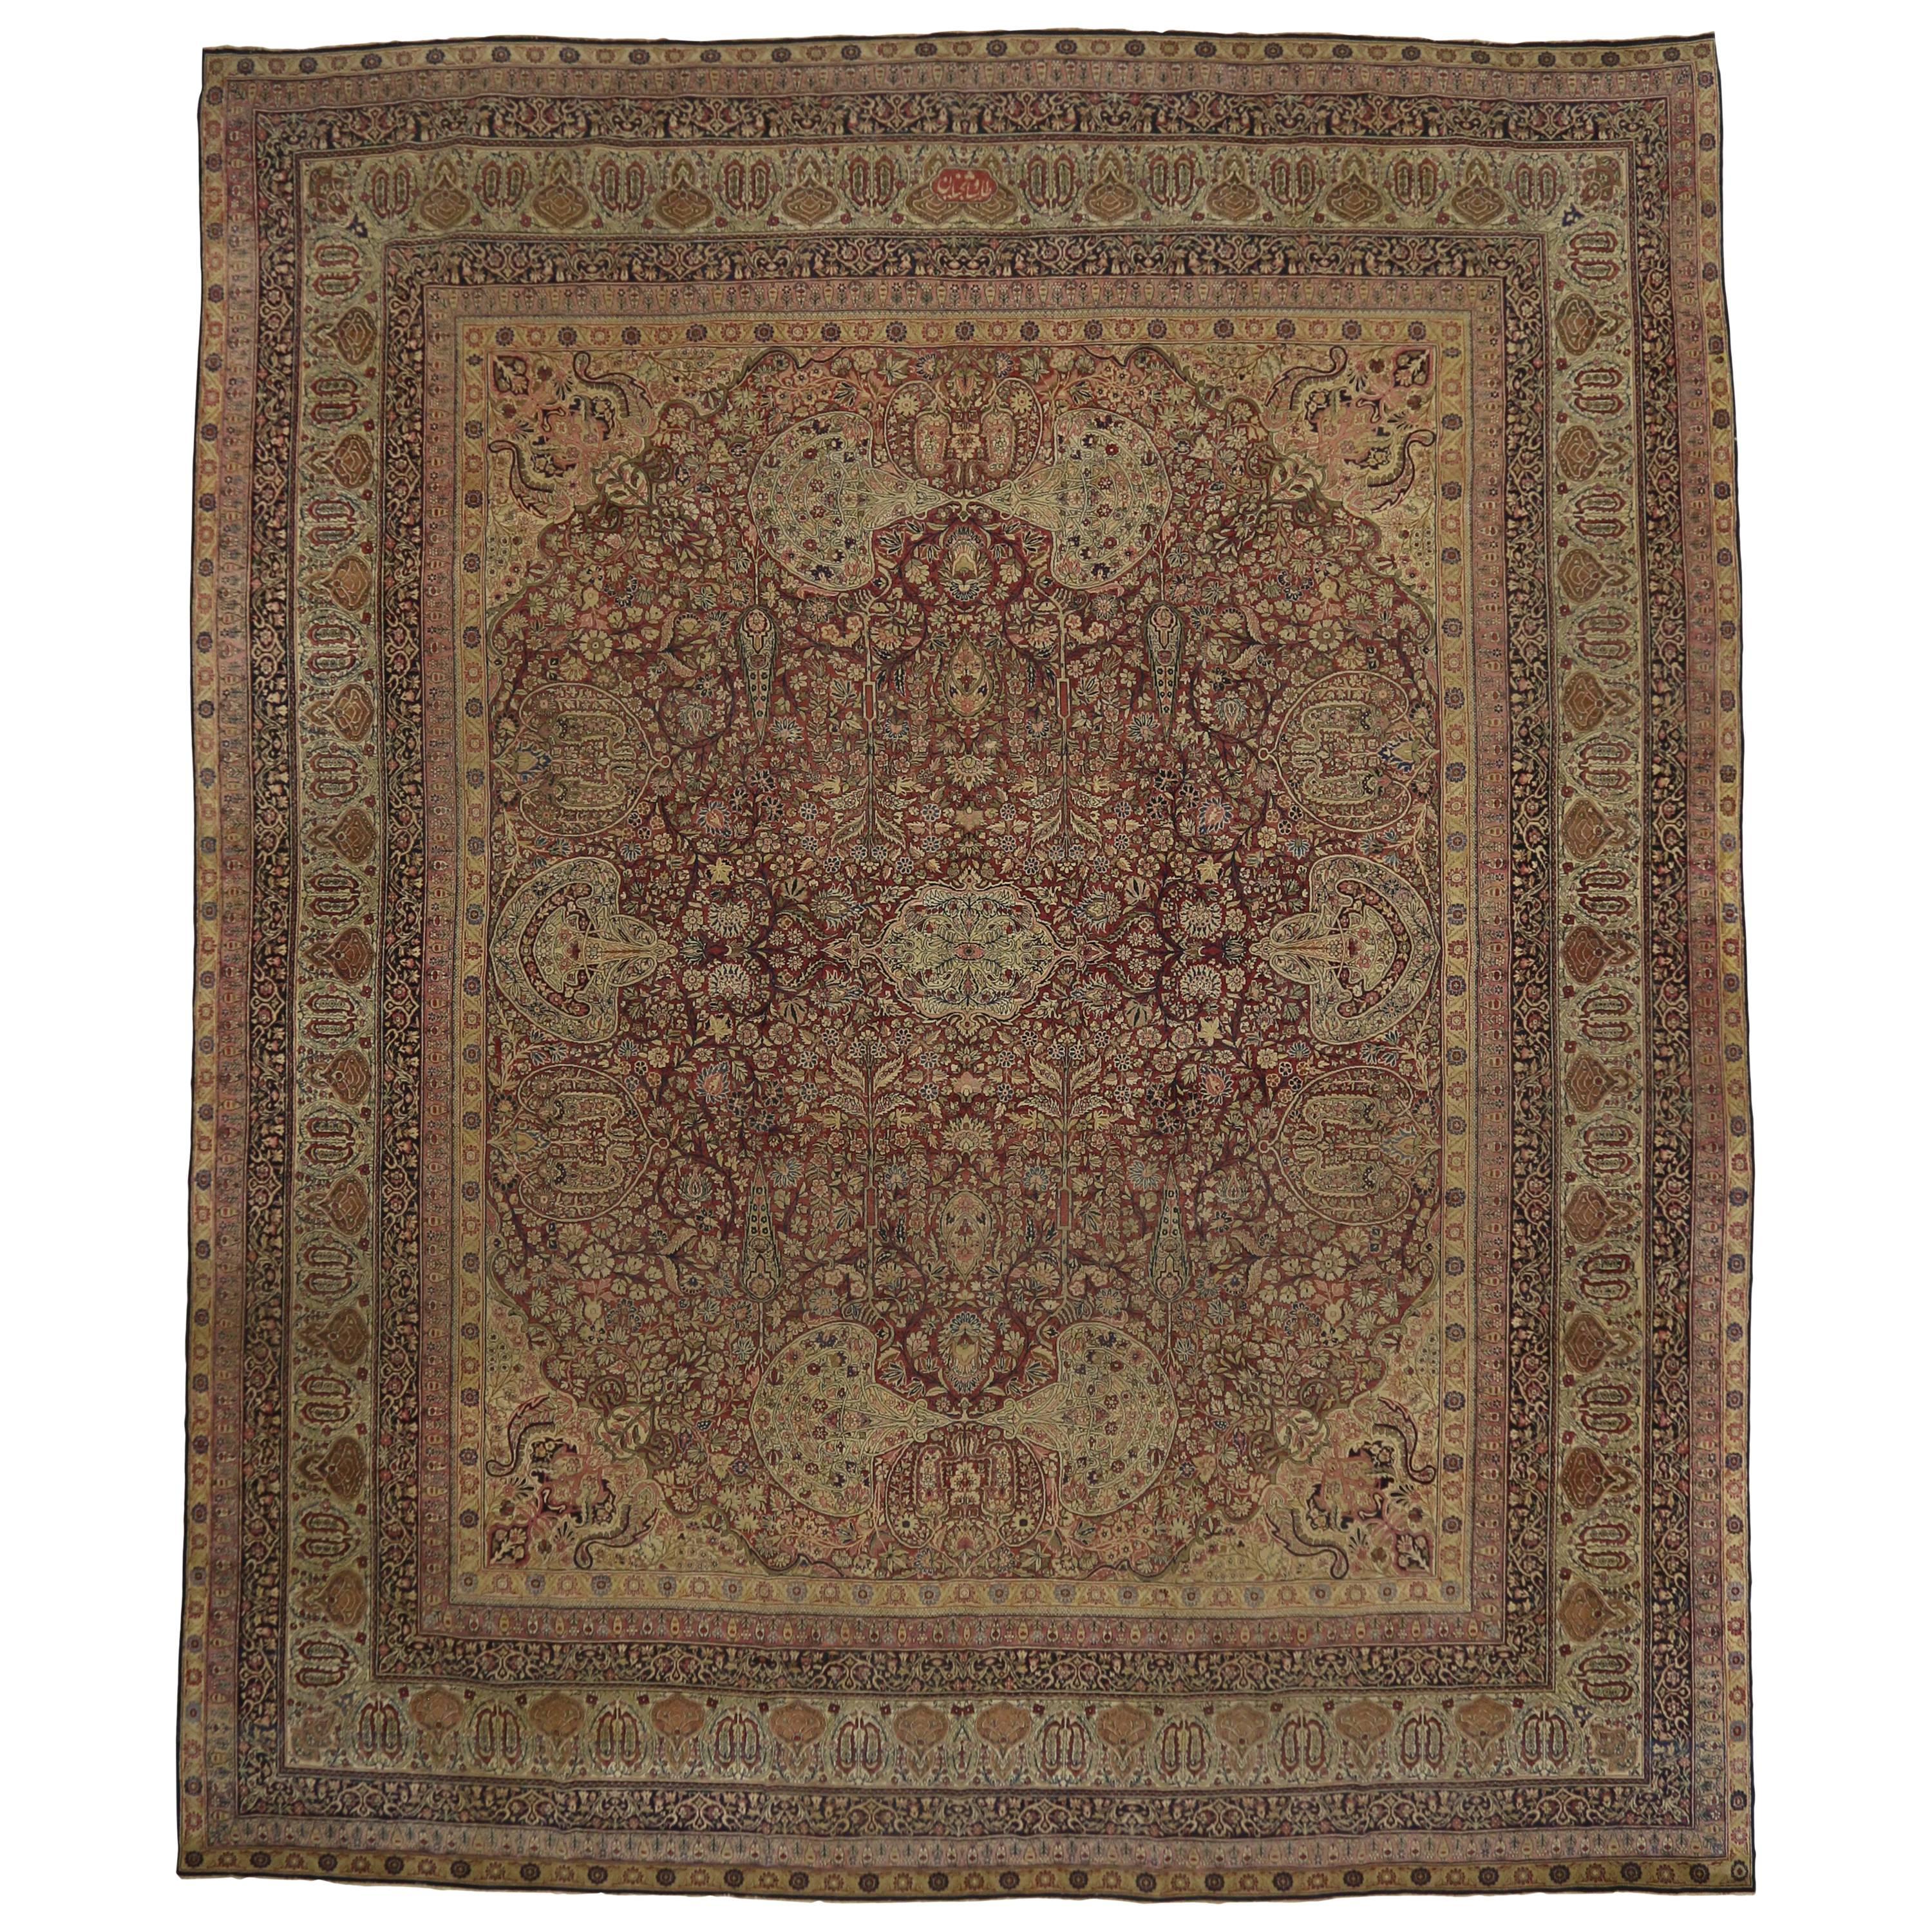 1880s Oversized Antique Persian Kermanshah Rug, Hotel Lobby Size Carpet For Sale